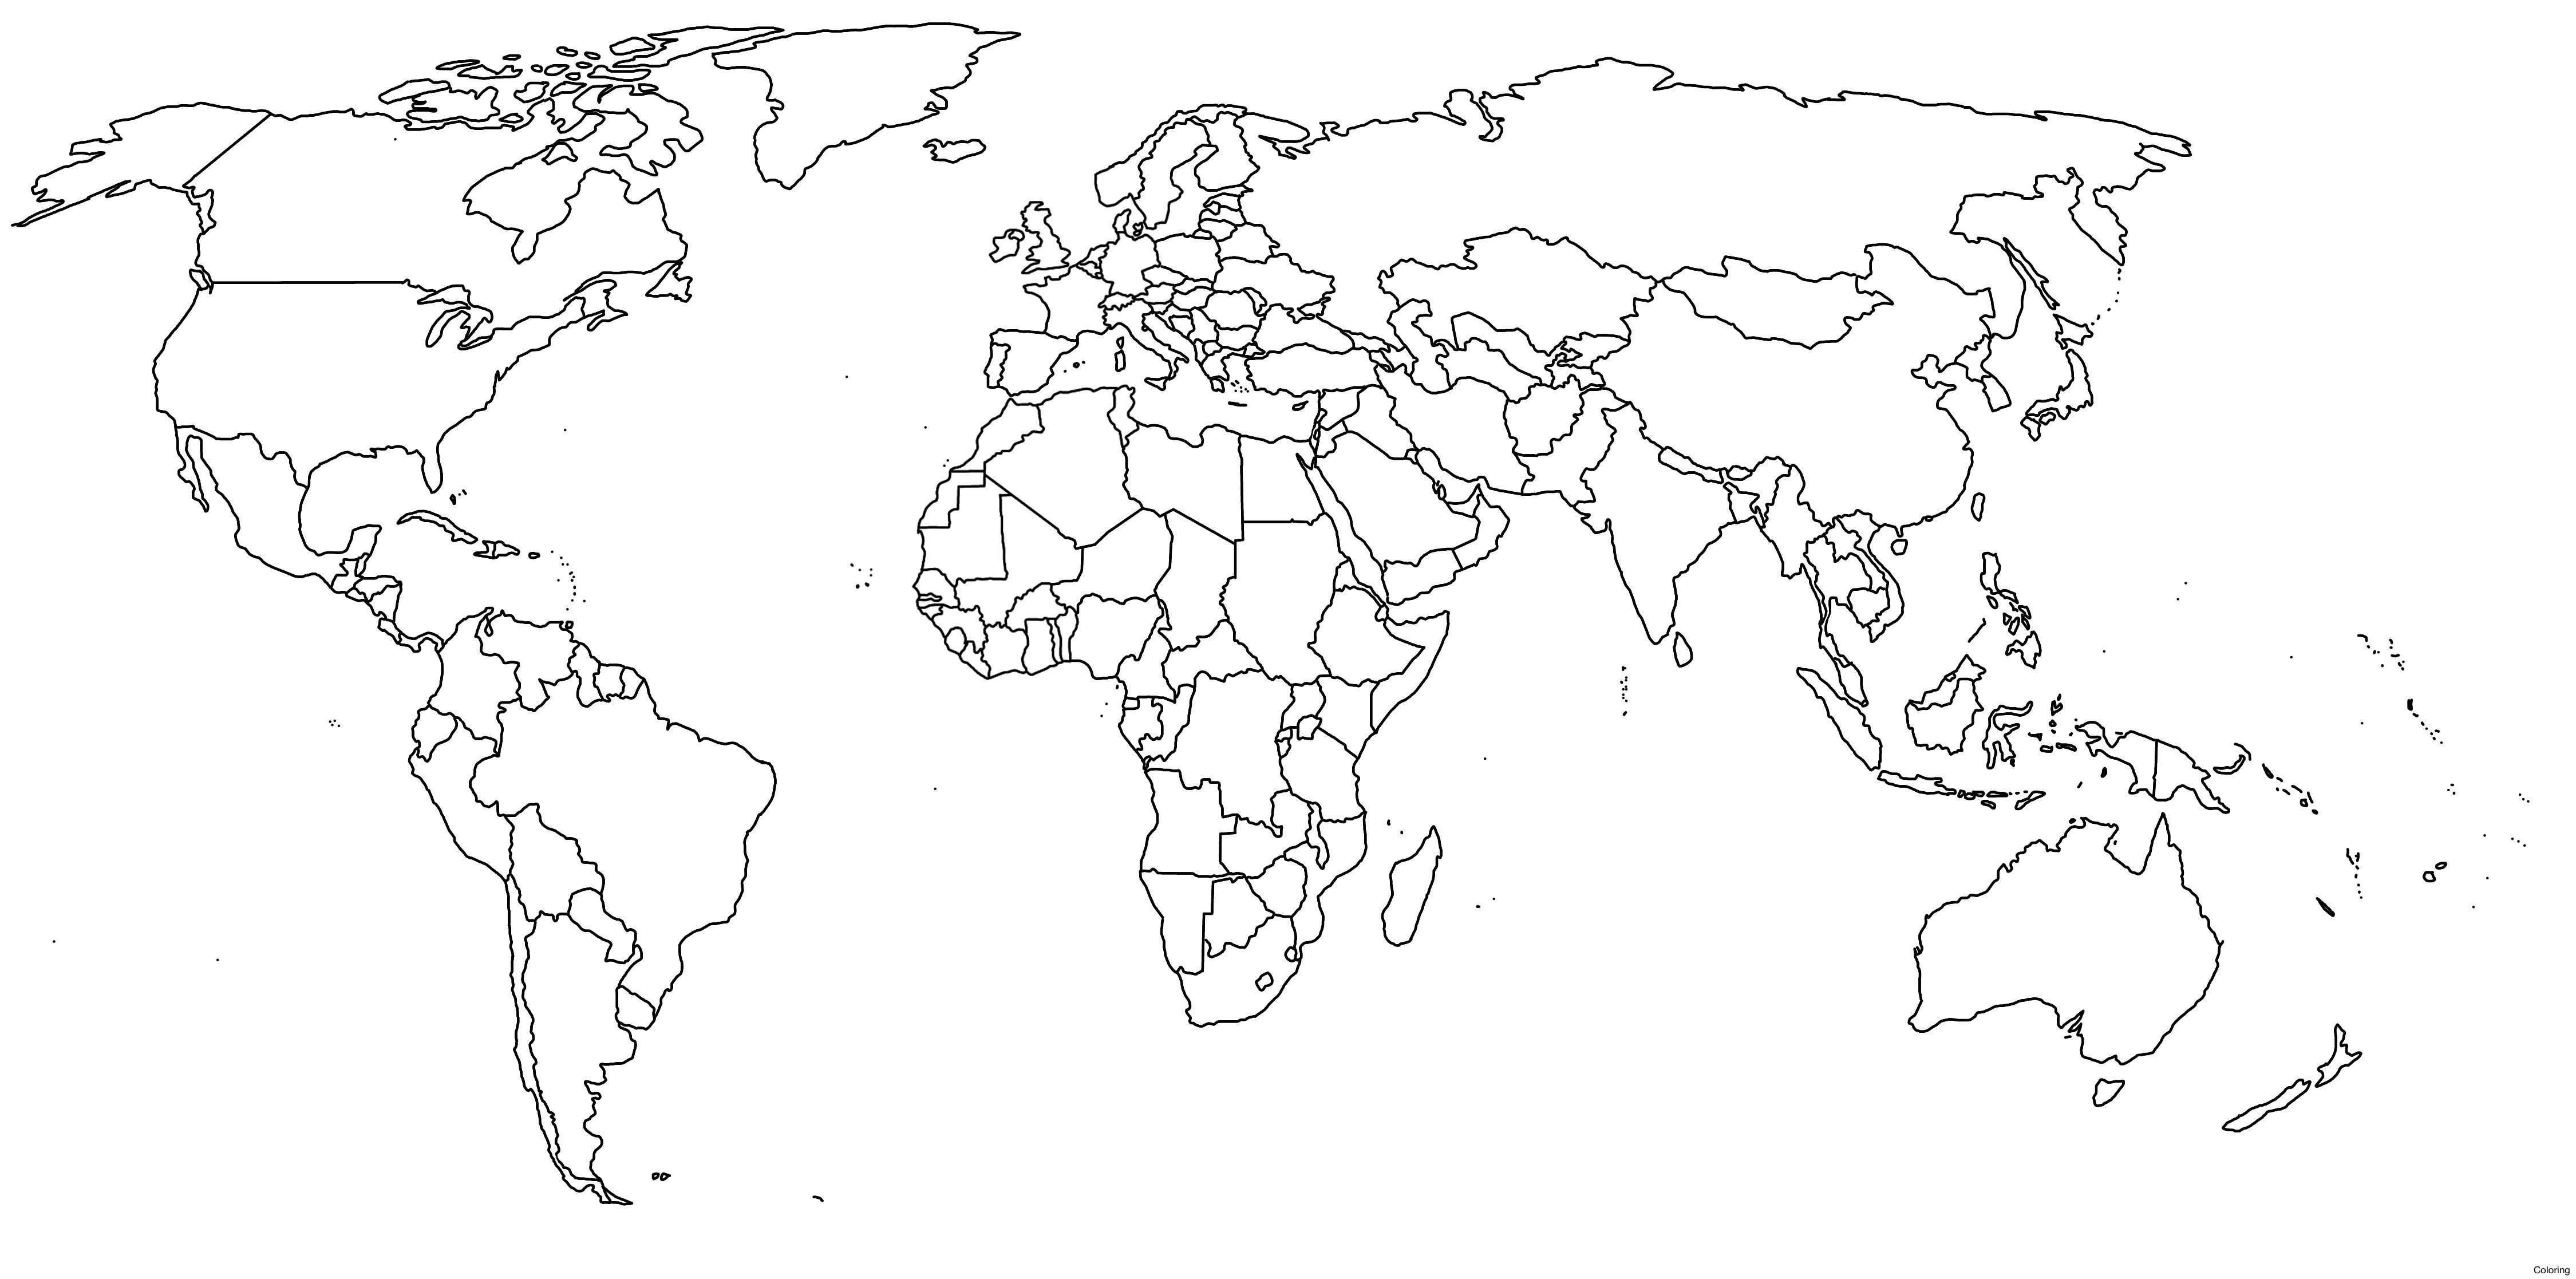 outline sketch of world map